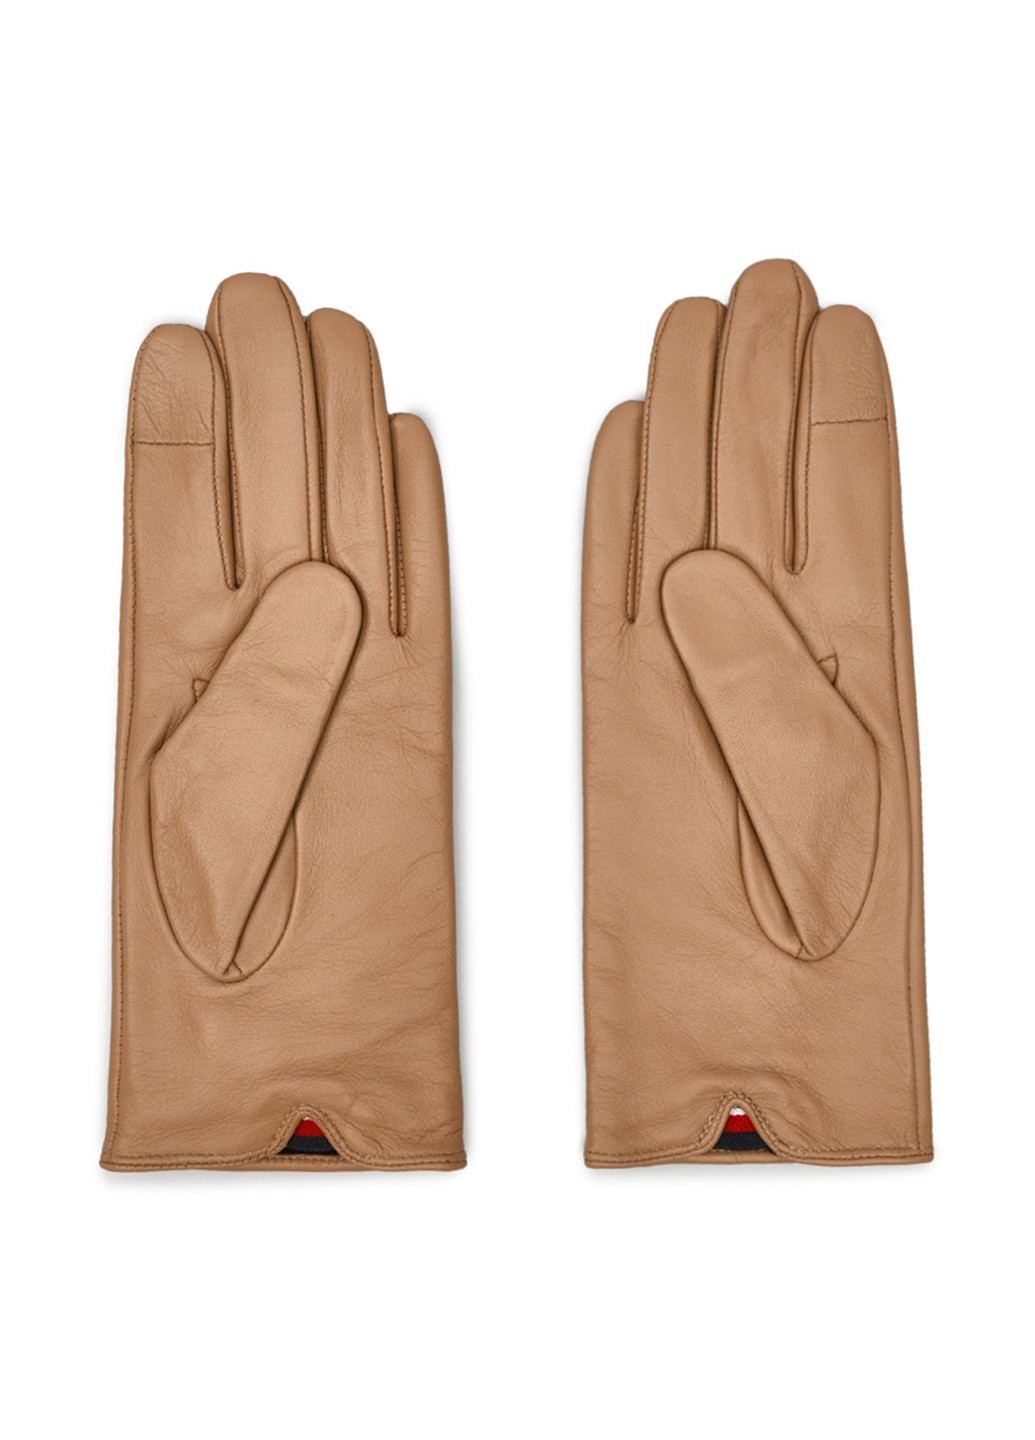 Перчатки Tommy Hilfiger однотонные бежевые кэжуалы натуральная кожа